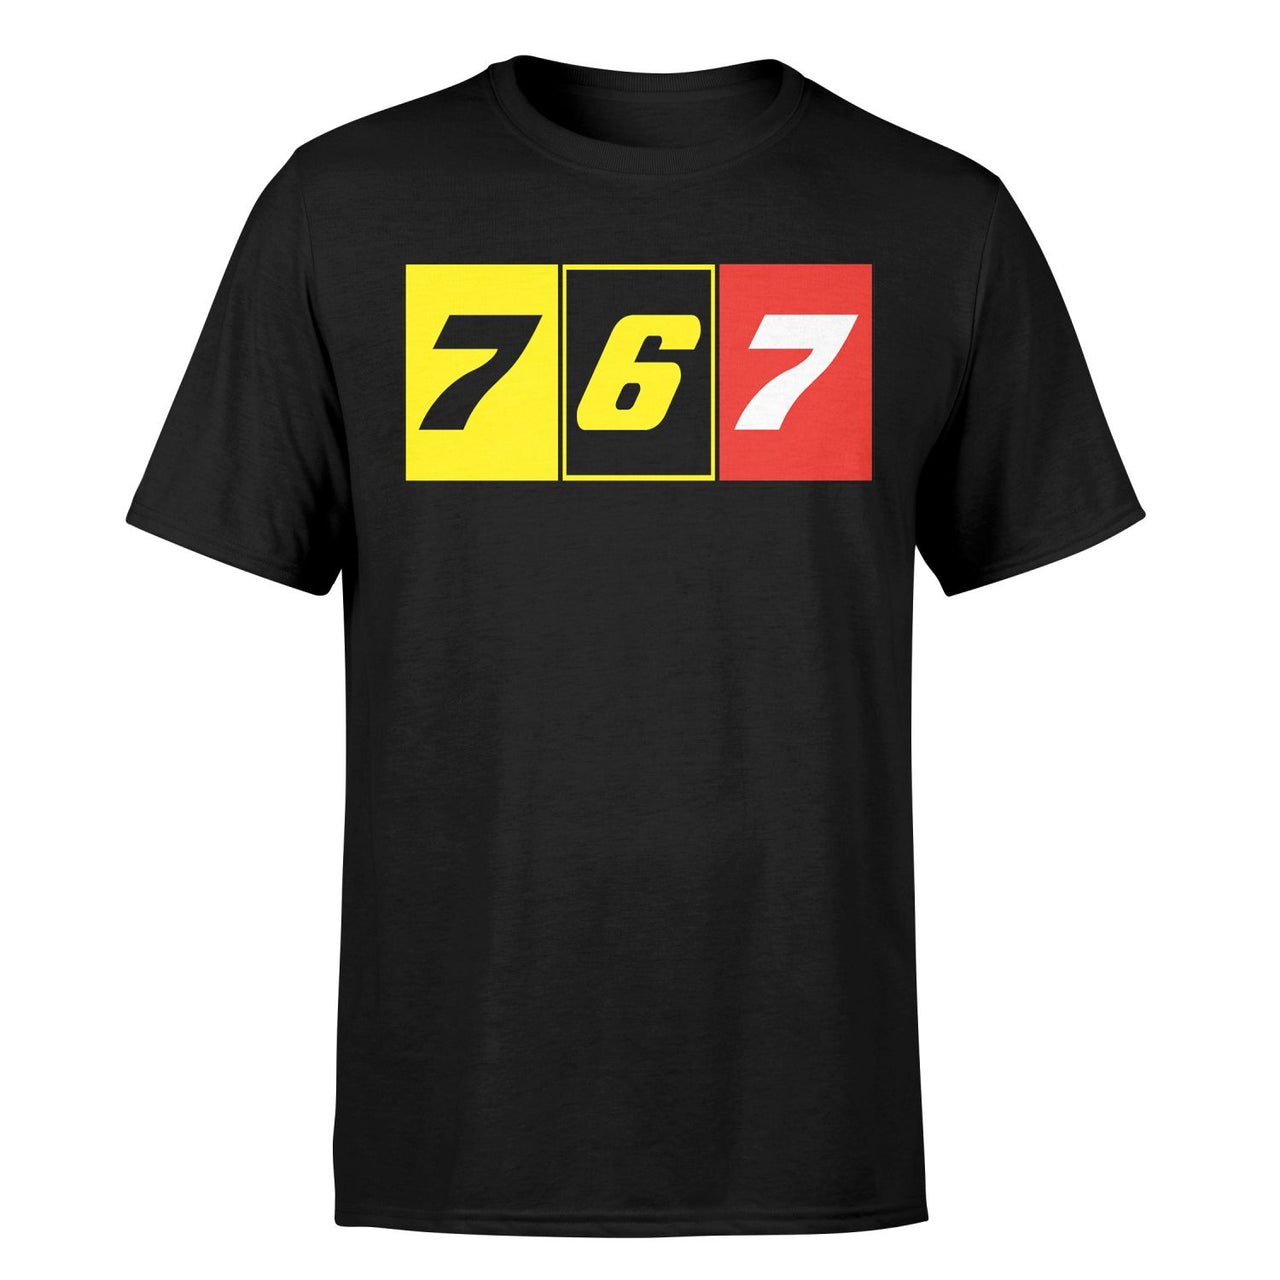 Flat Colourful 767 Designed T-Shirts